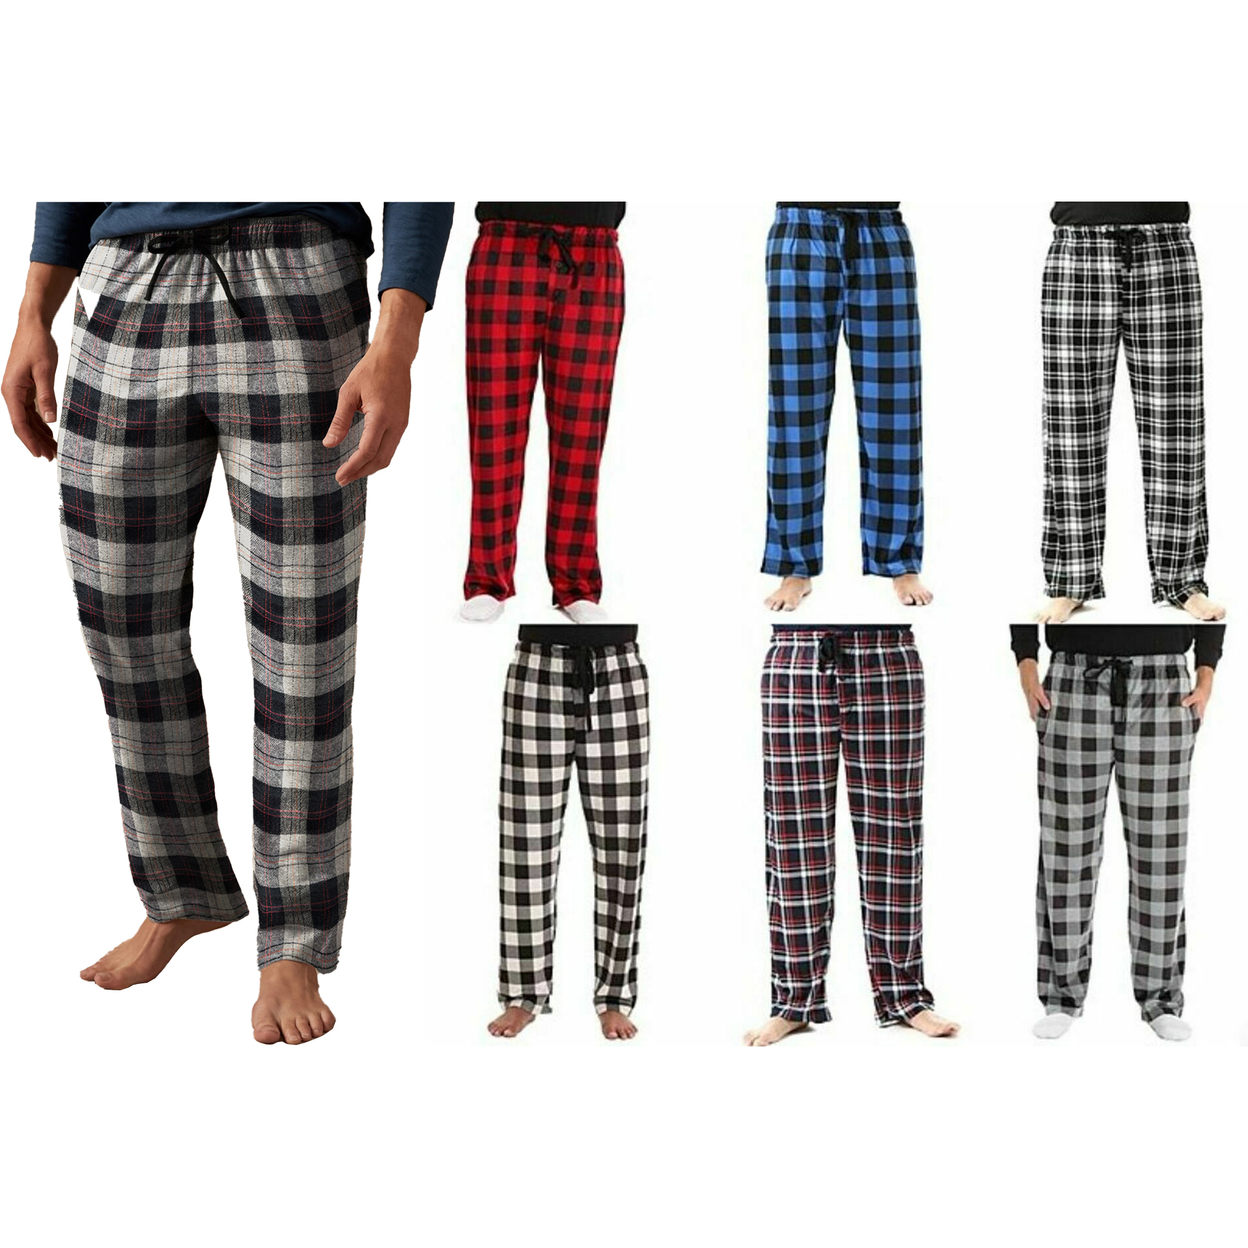 Multi-Pack: Men's Ultra Soft Cozy Flannel Fleece Plaid Pajama Sleep Bottom Lounge Pants - 3-pack, Large